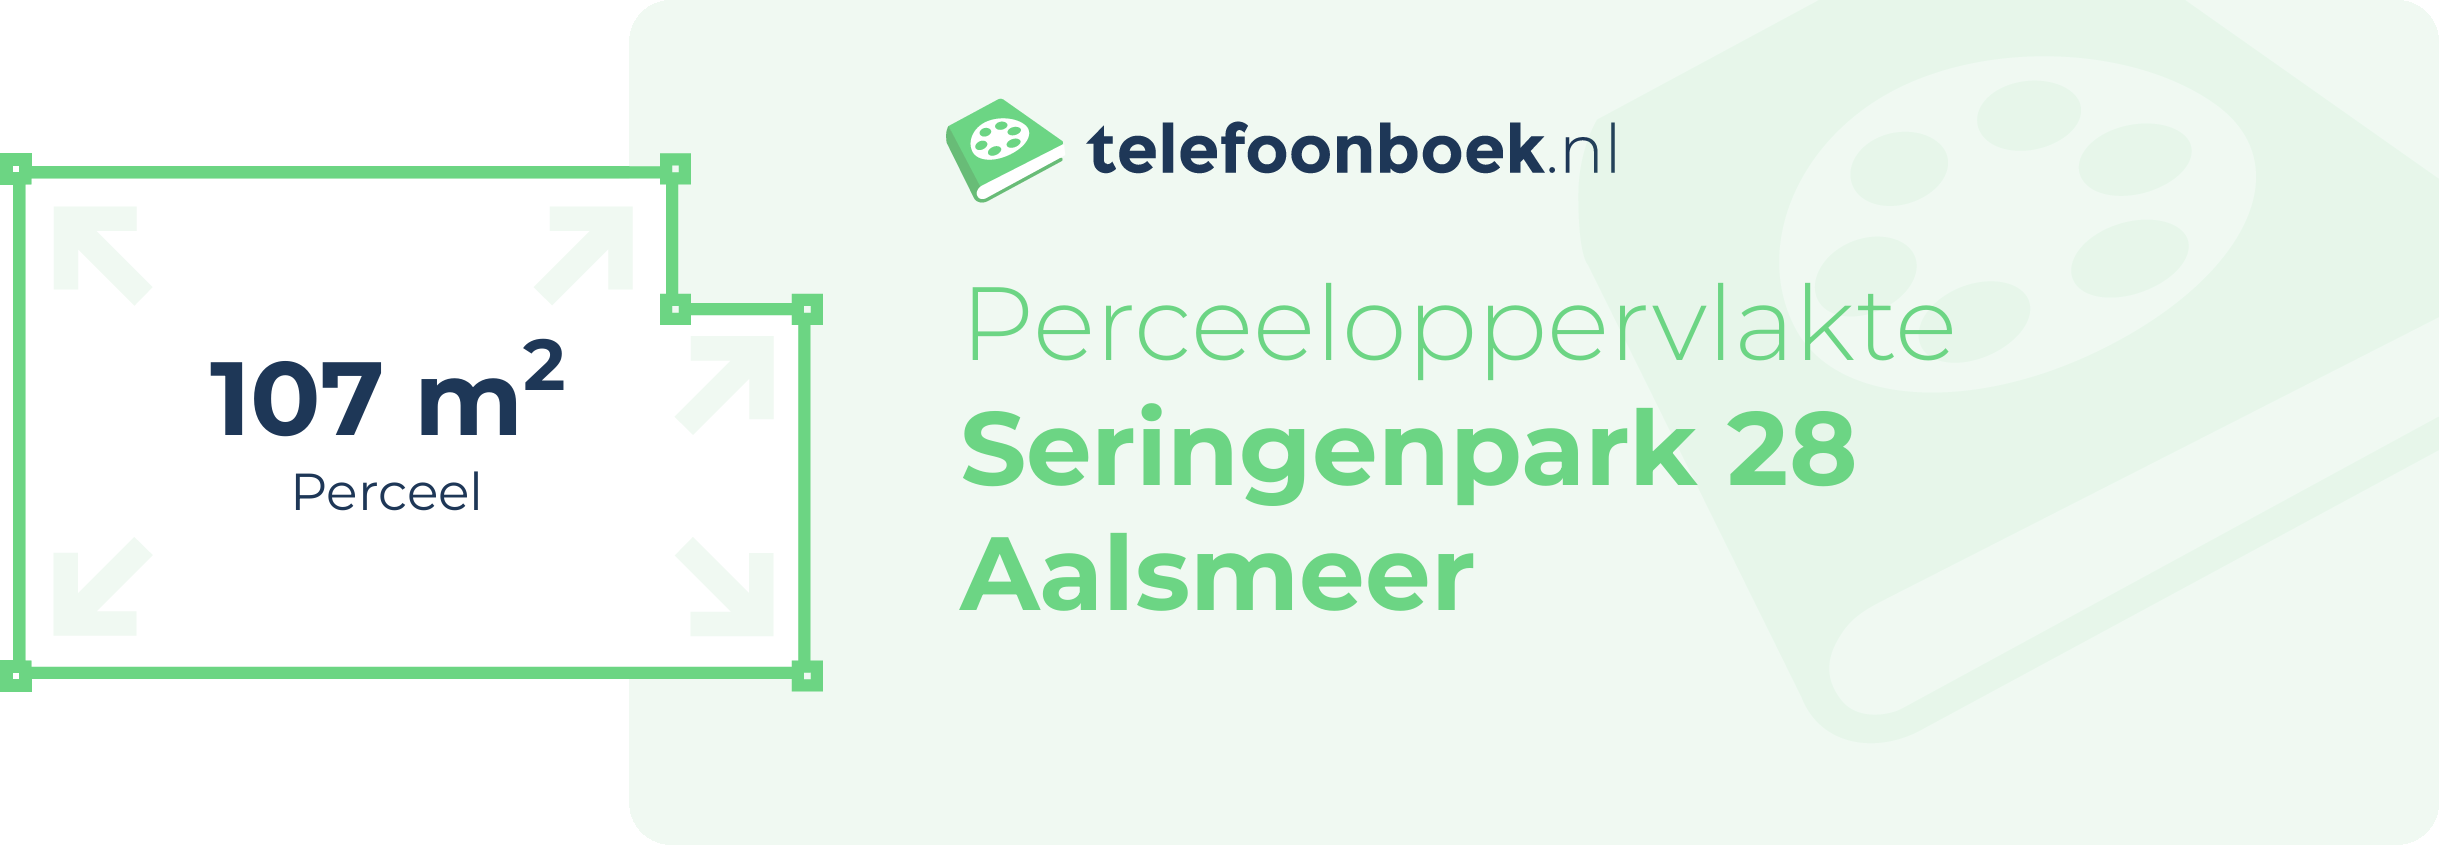 Perceeloppervlakte Seringenpark 28 Aalsmeer